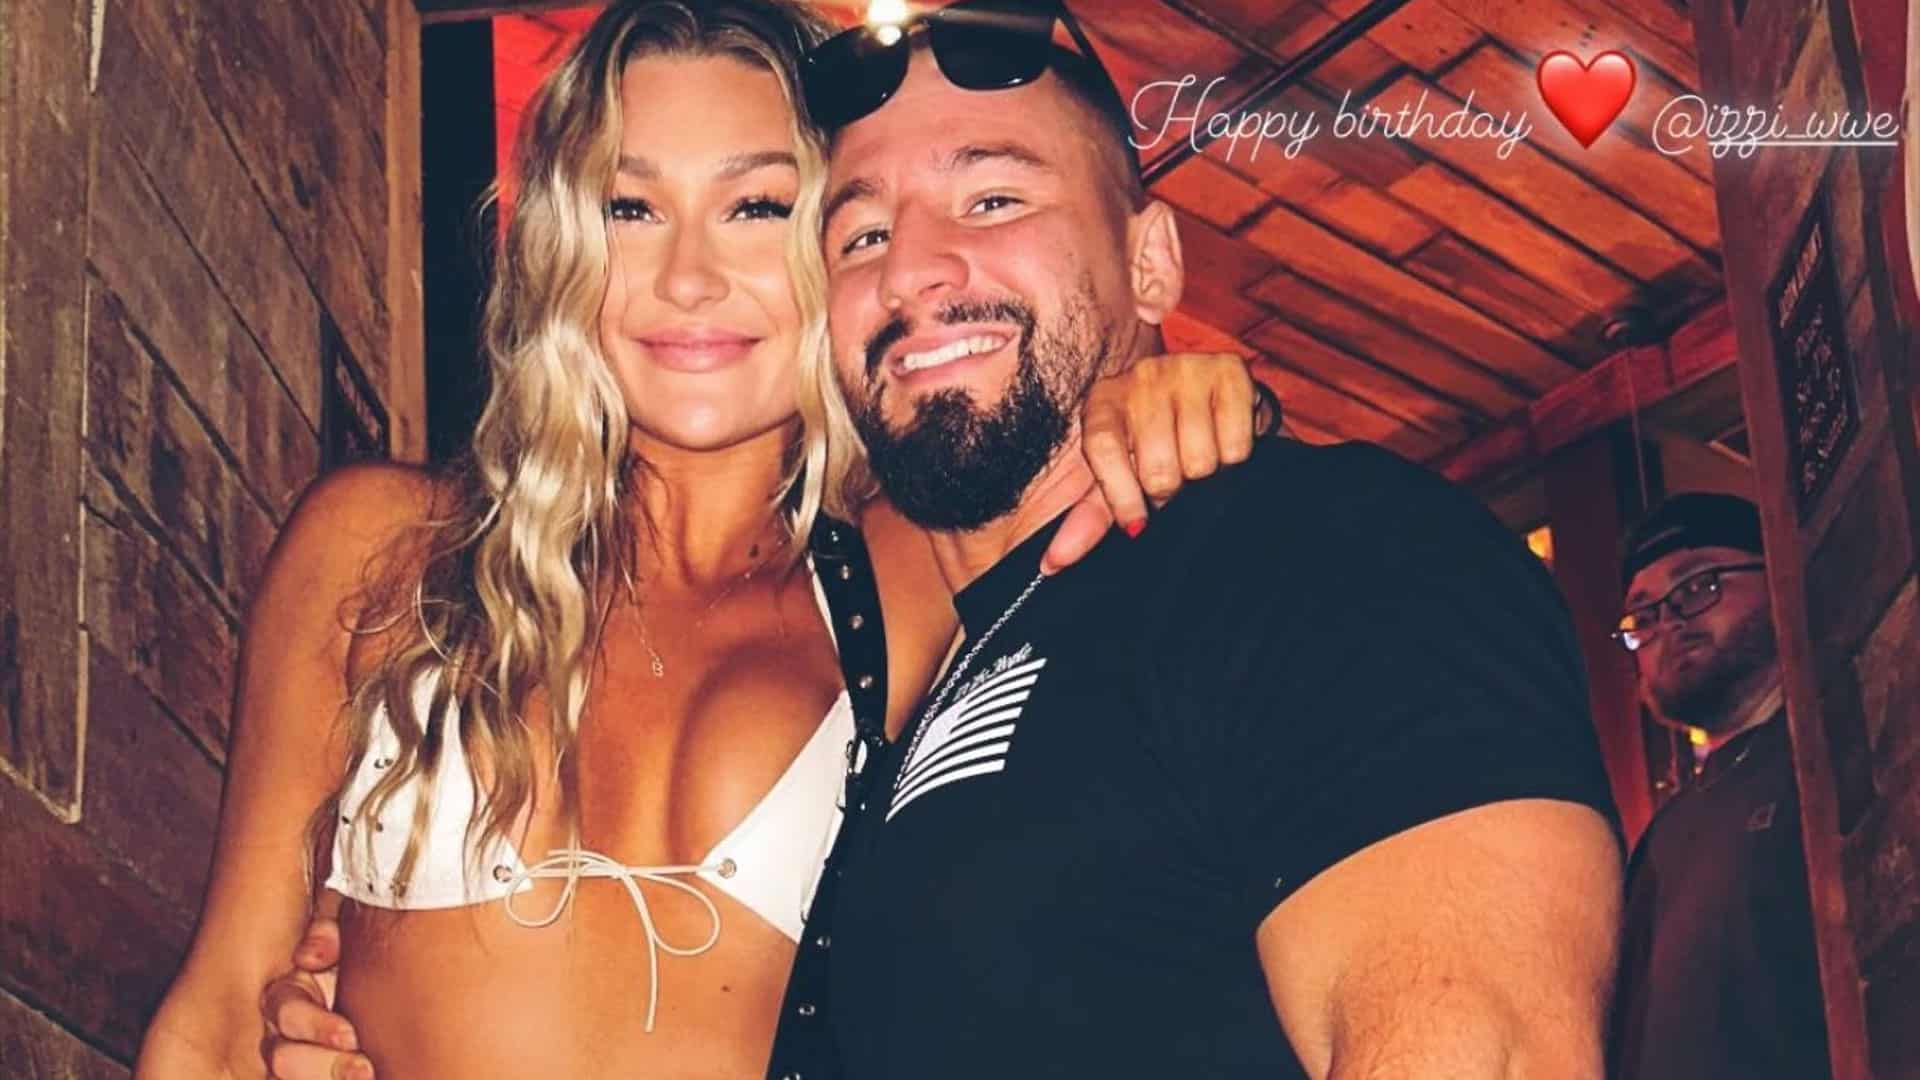 Who is the current romantic partner of NXT Superstar Bron Breakker?